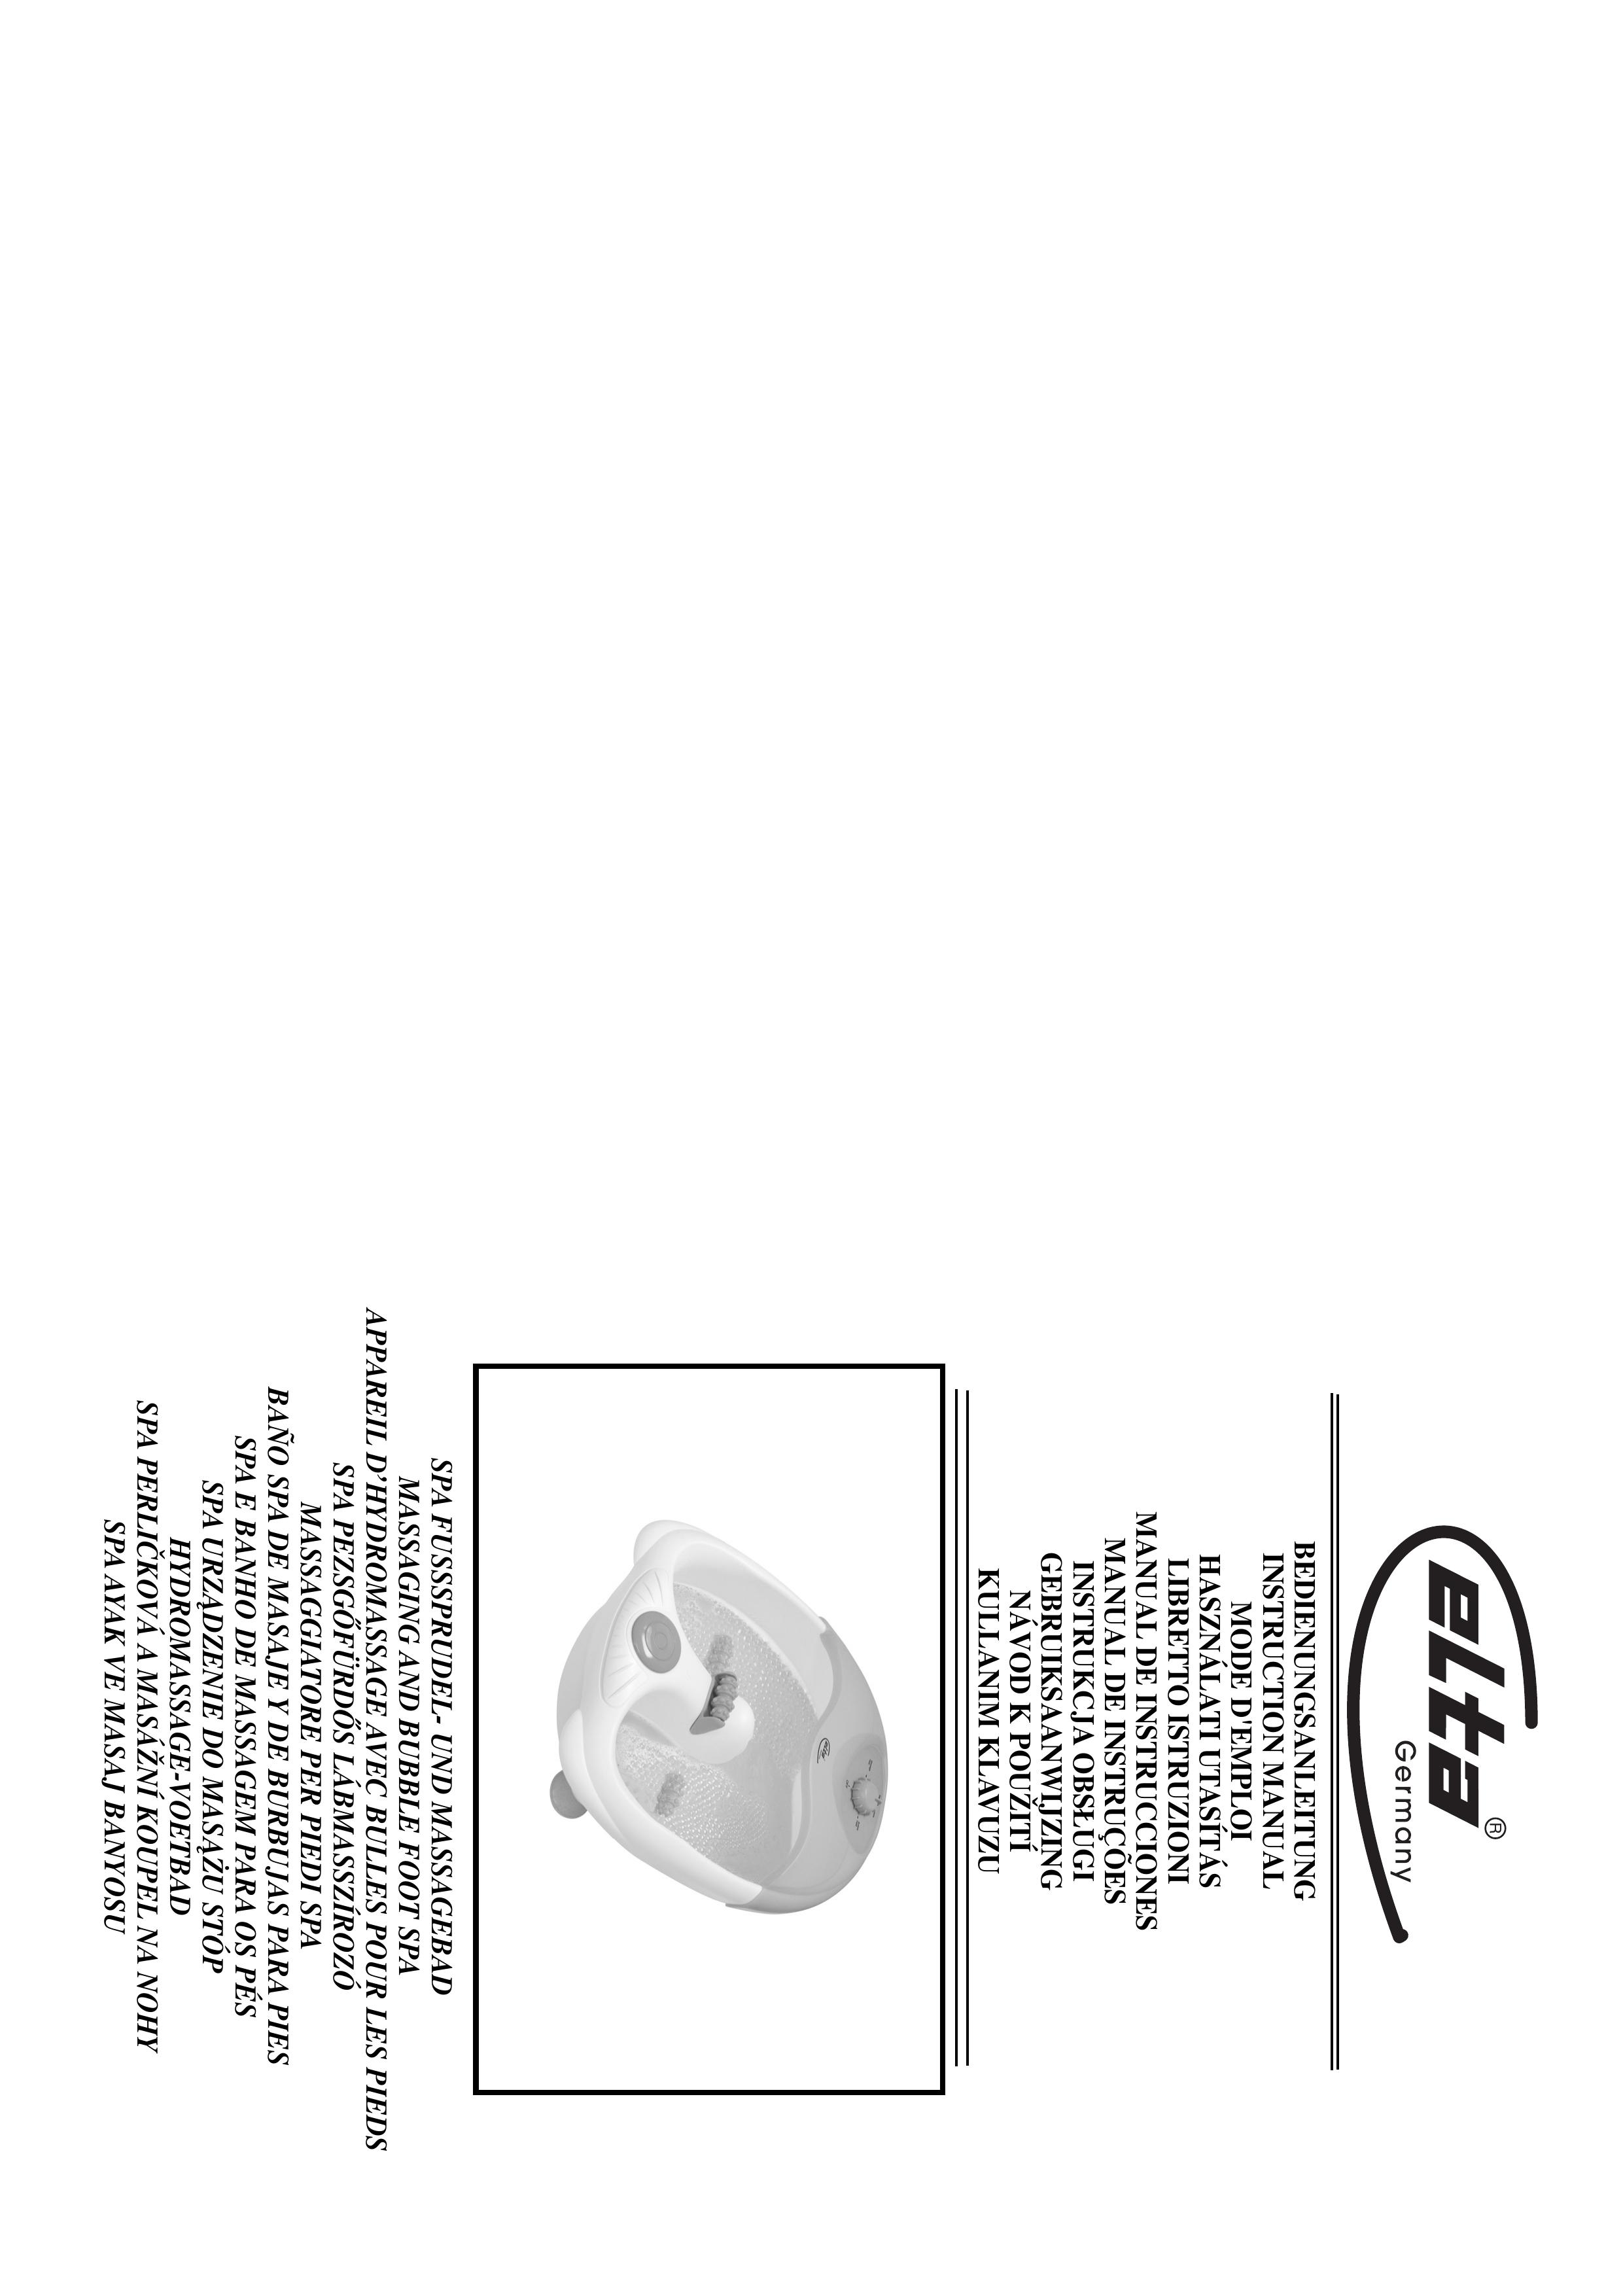 Elta FS120 Pedicure Spa User Manual